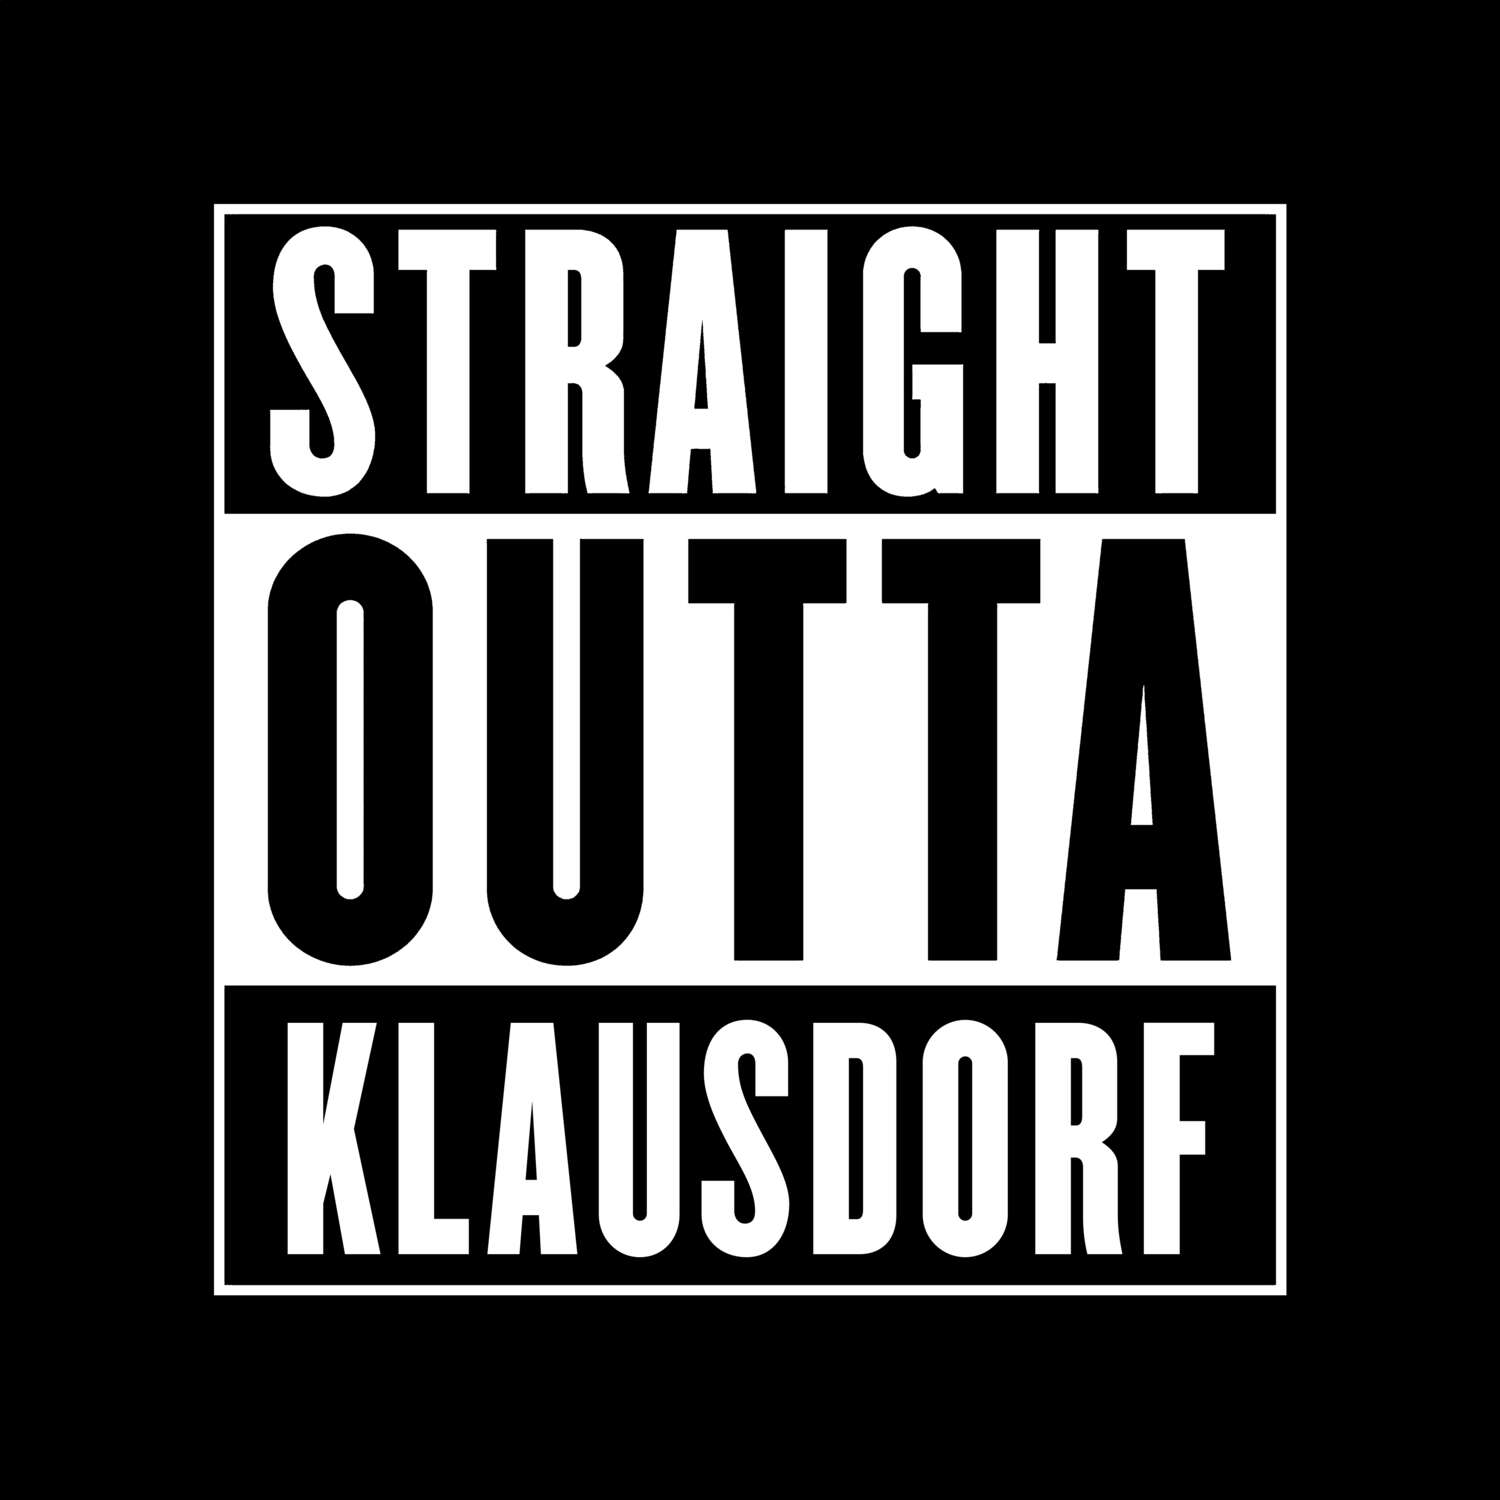 Klausdorf T-Shirt »Straight Outta«